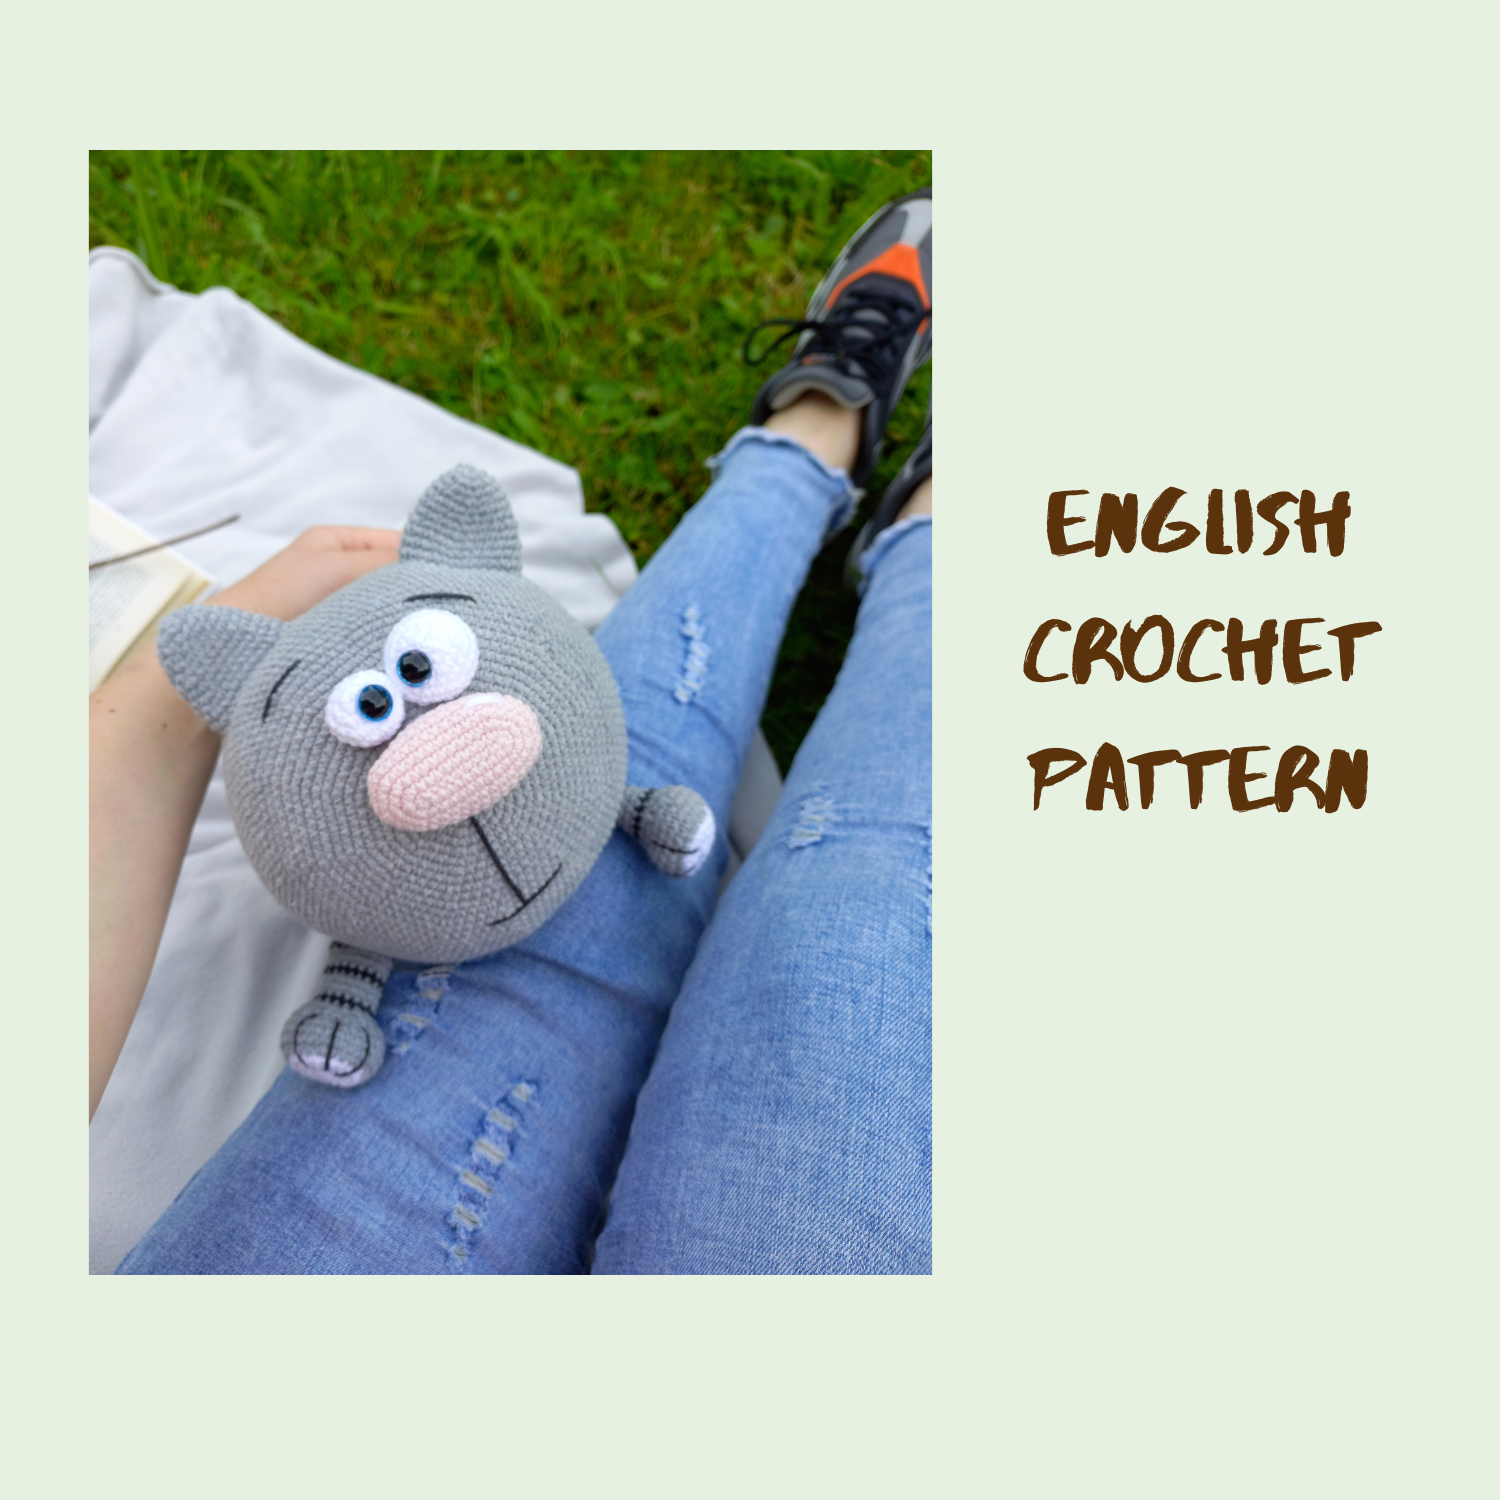 English crochet pattern Pillow-roller Lazy cat 1 new